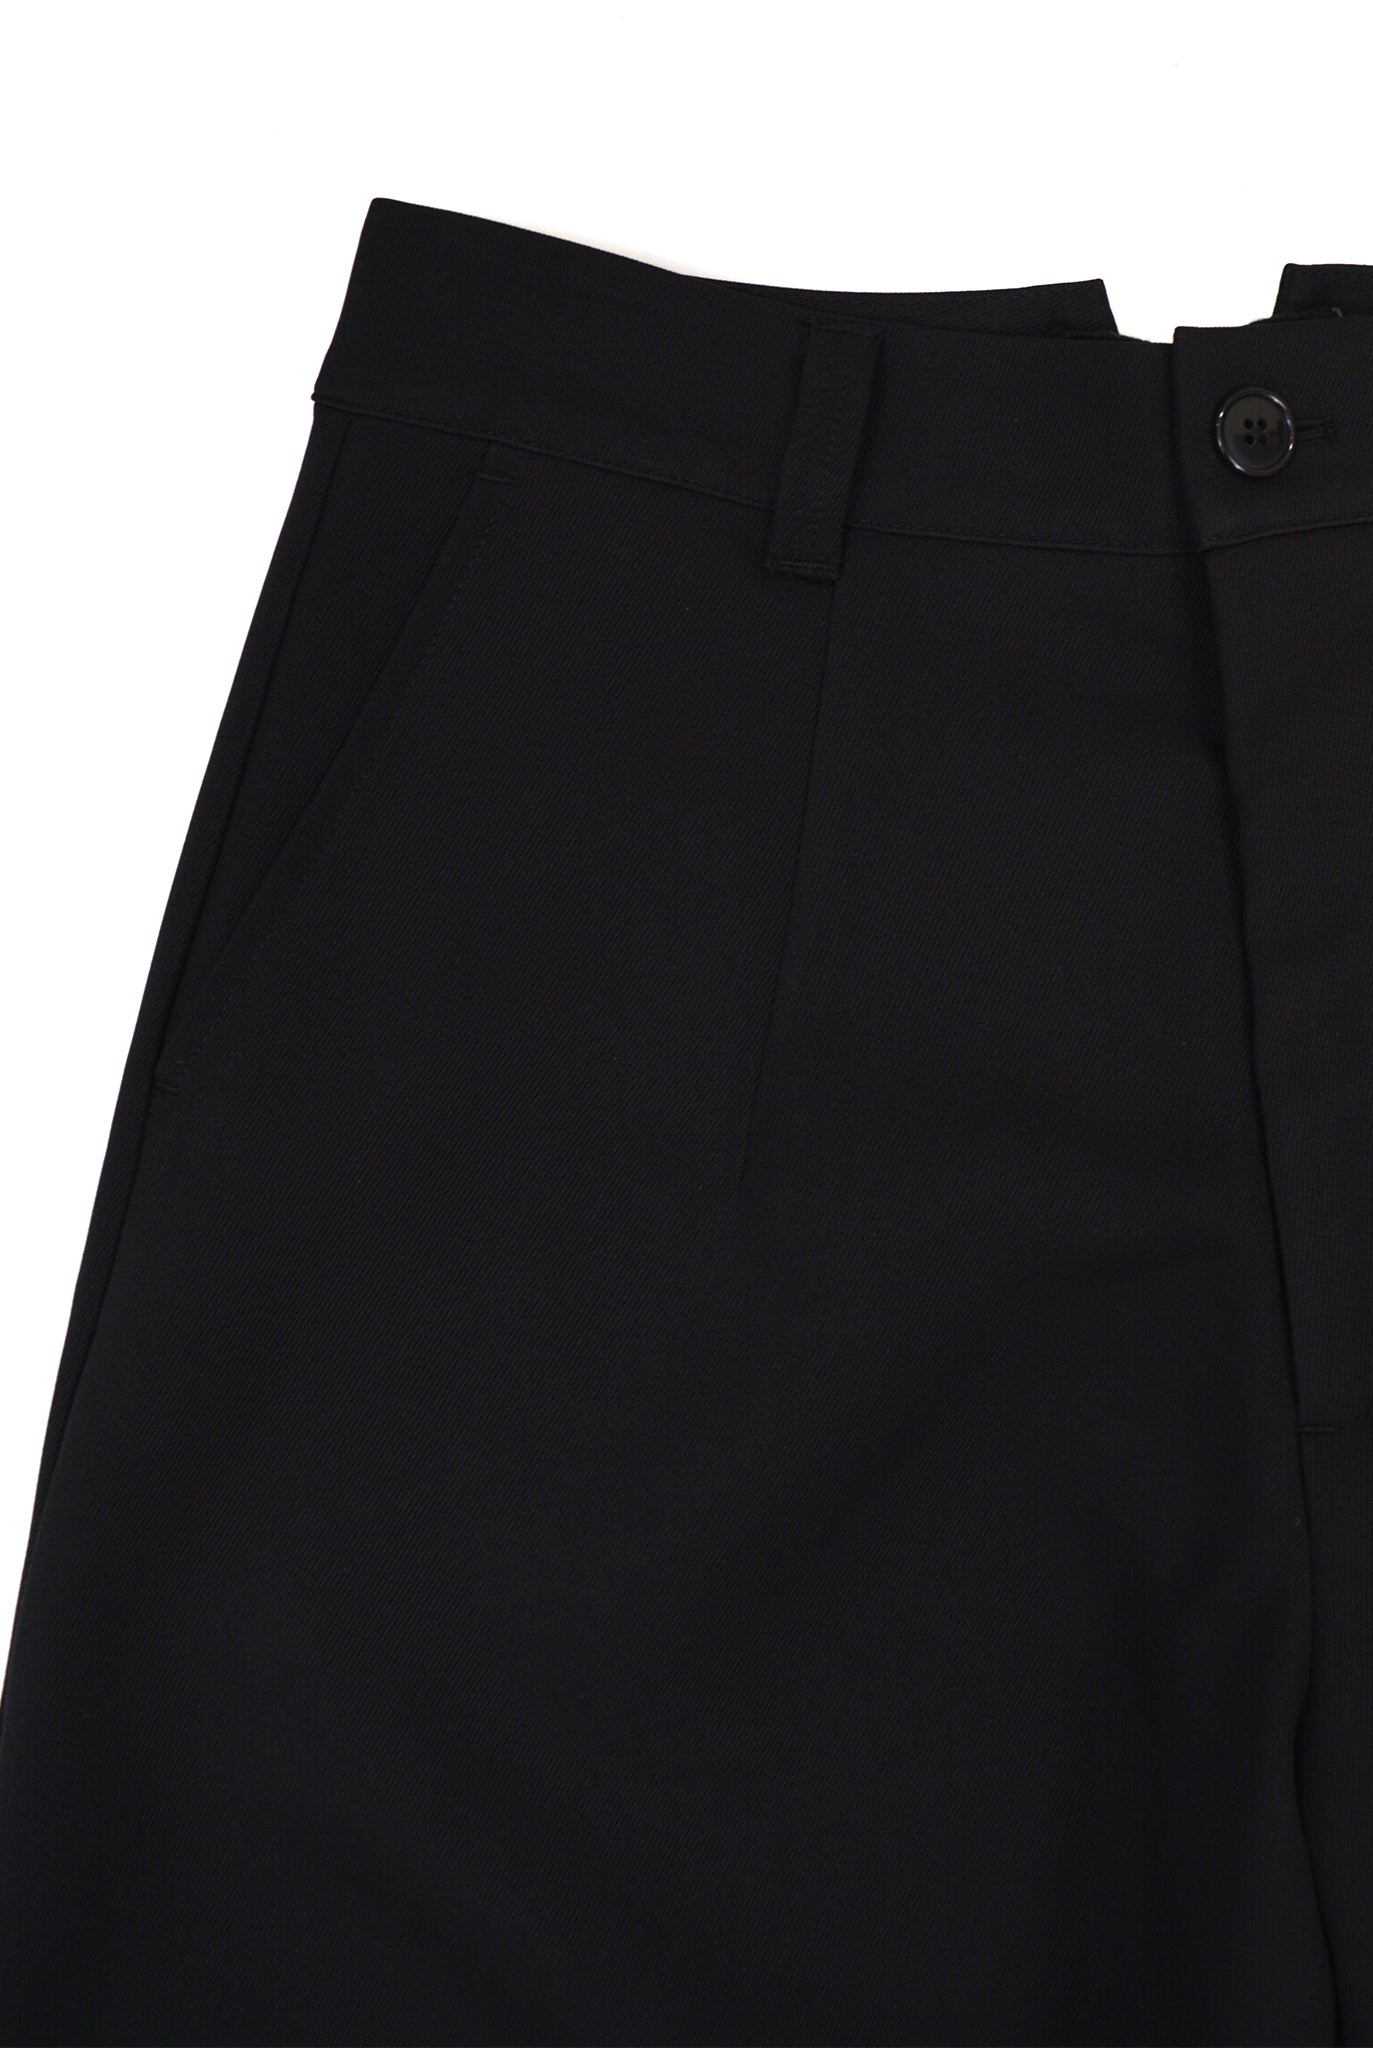 sailor-pants-tie-neck-knit-top-black-piping-work-wear-office-style-blog1 -  MEMORANDUM